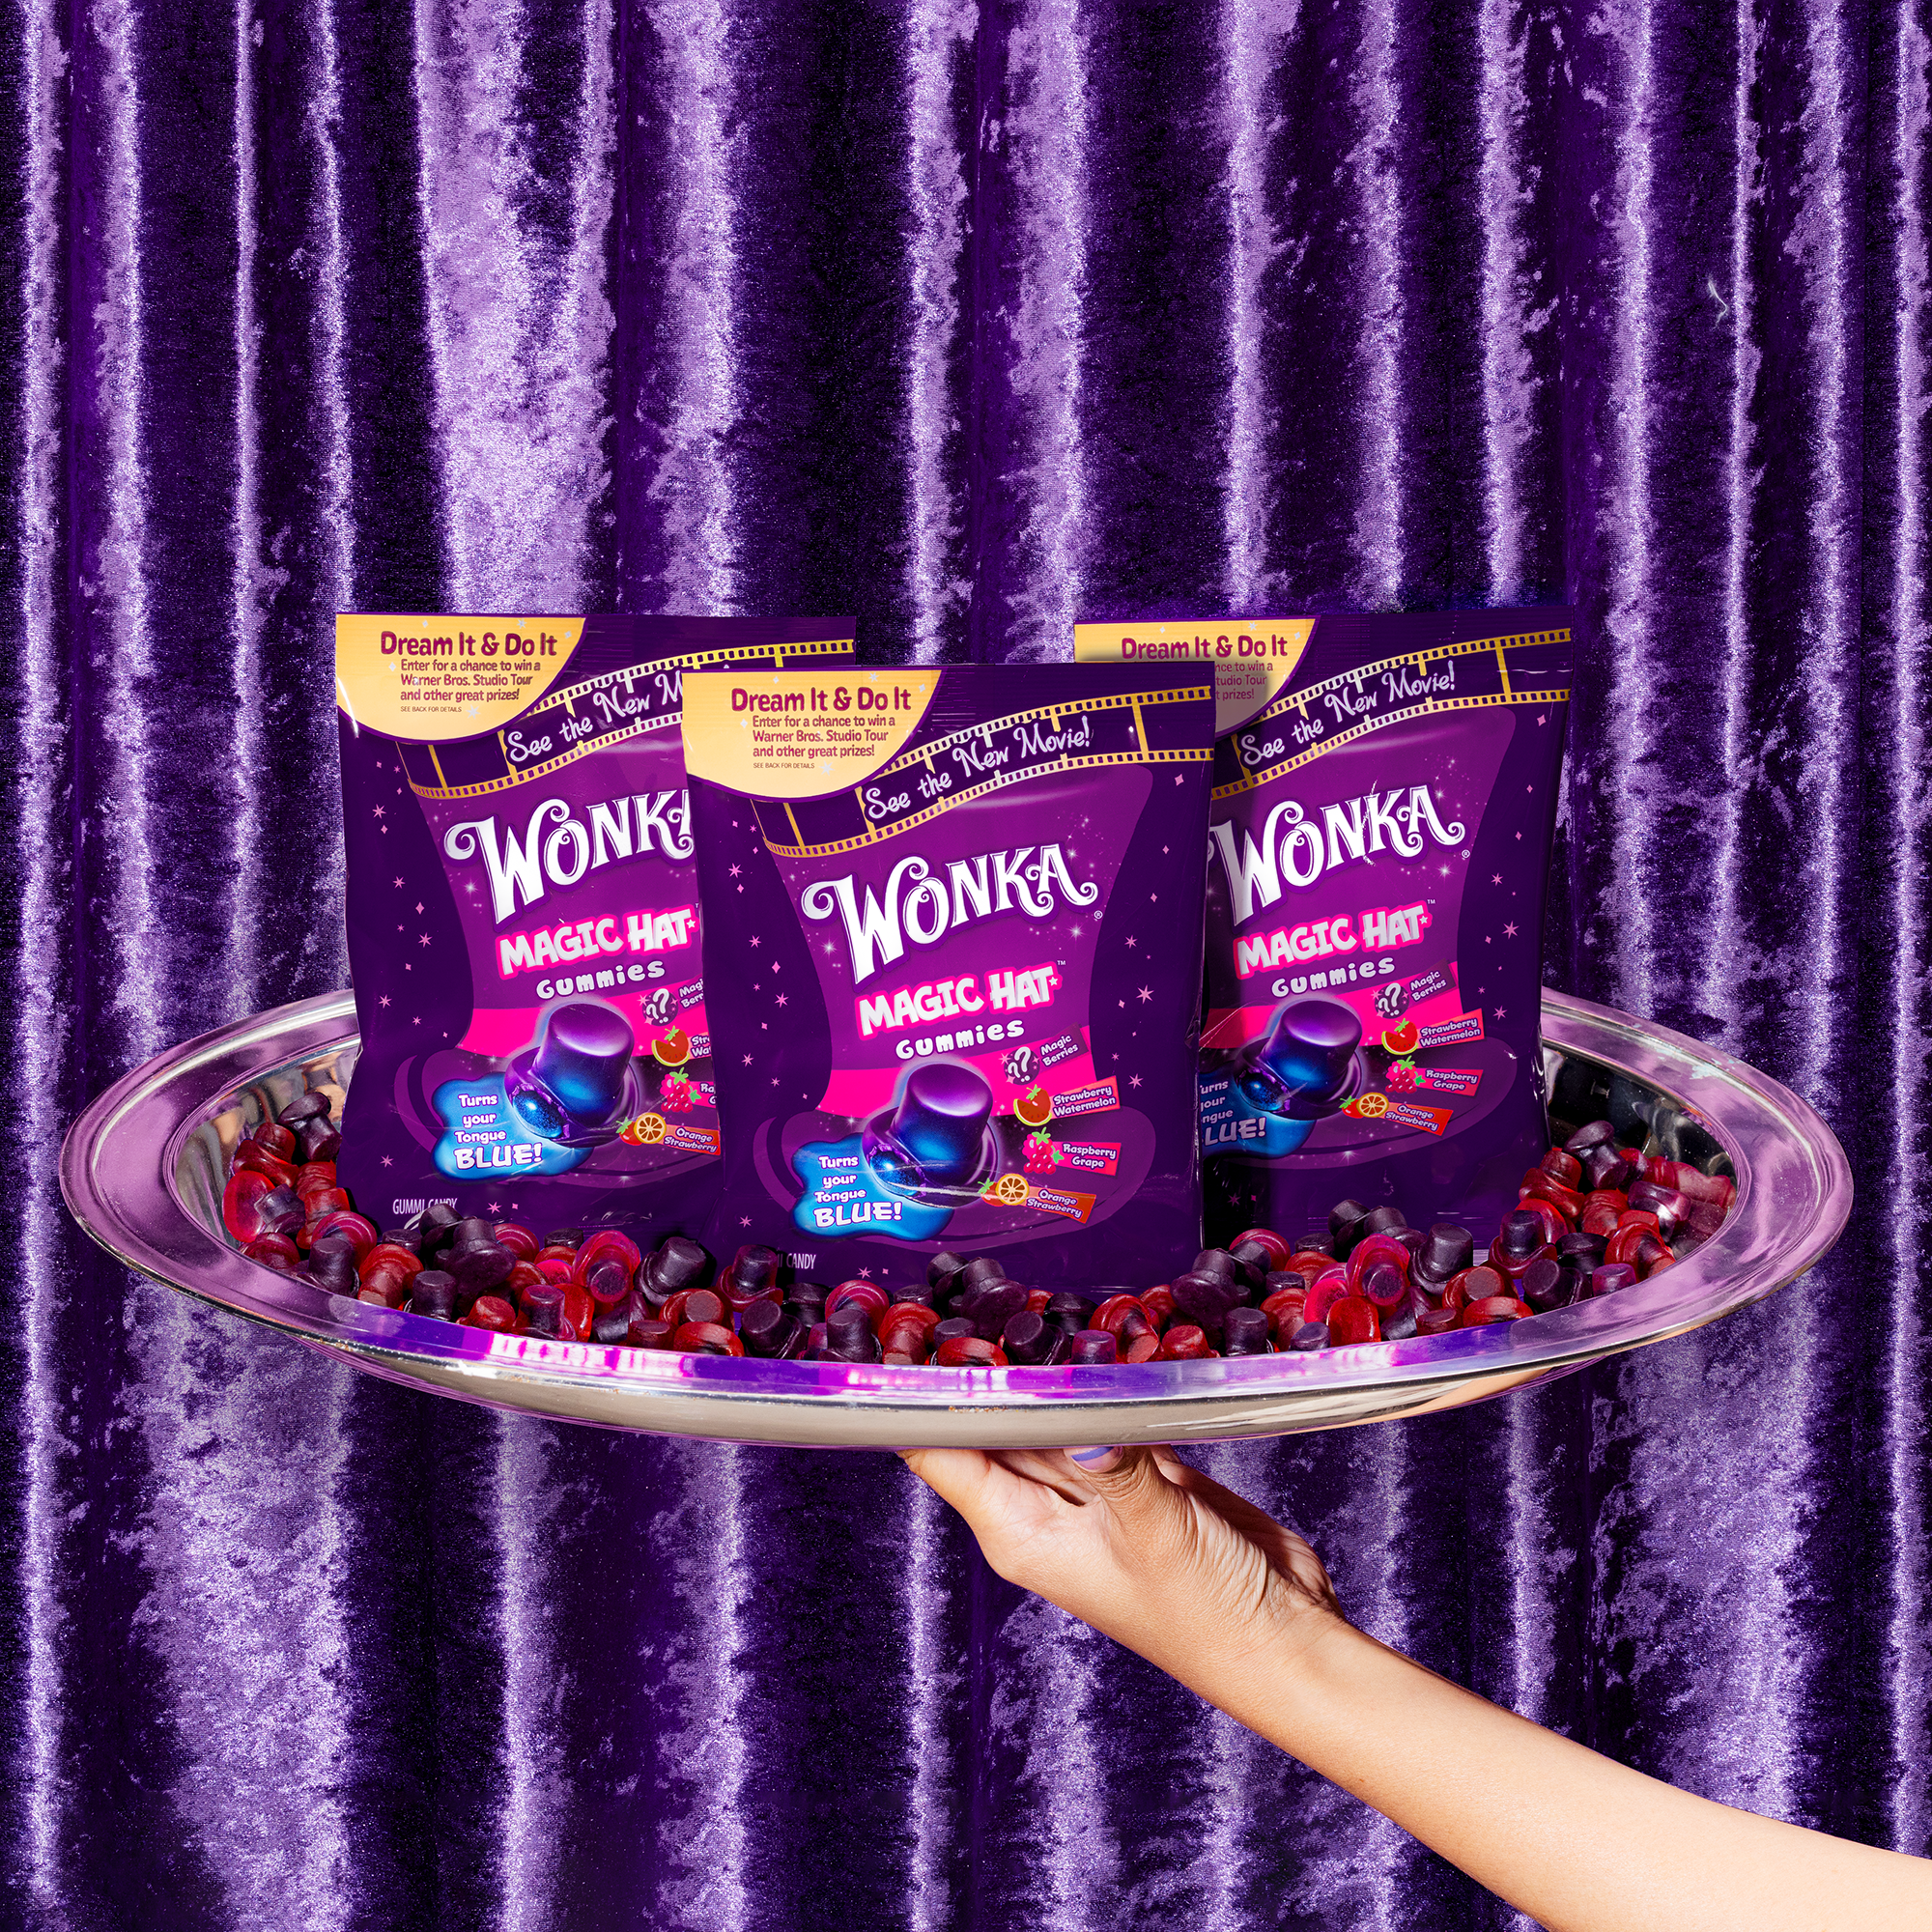 Wonka Magic is served_Mobile